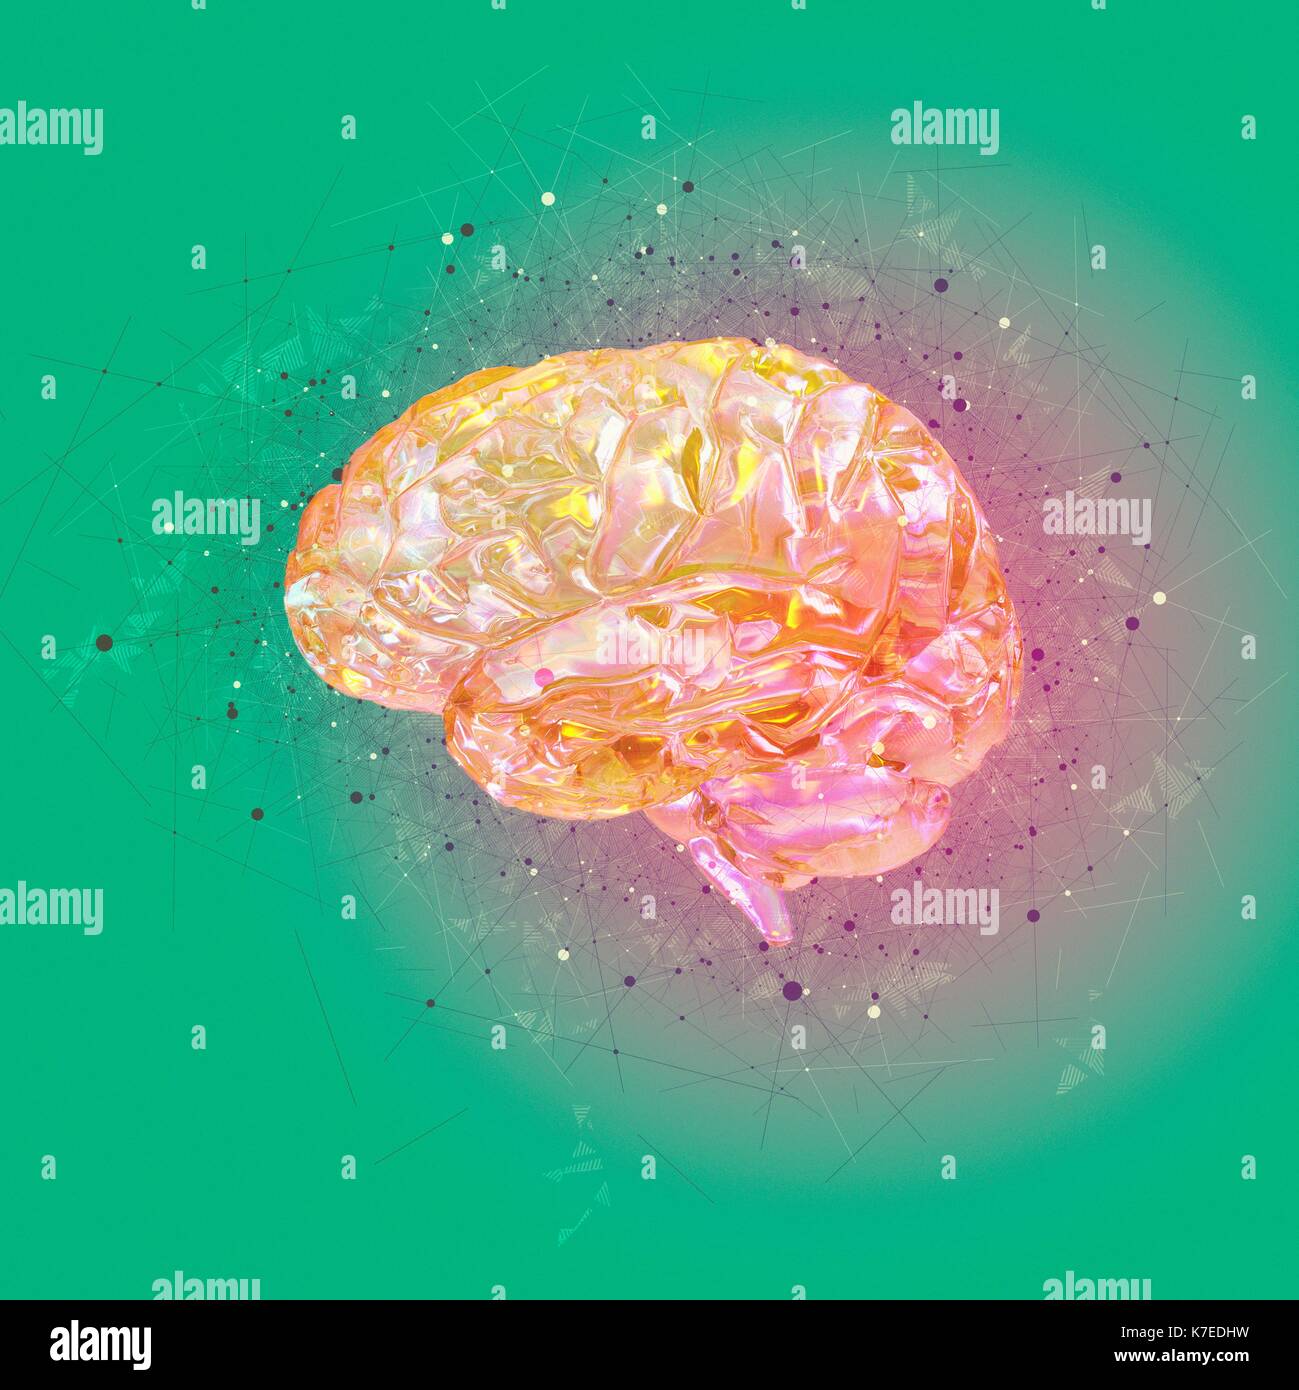 Atomic structure of the human brain, illustration. Stock Photo